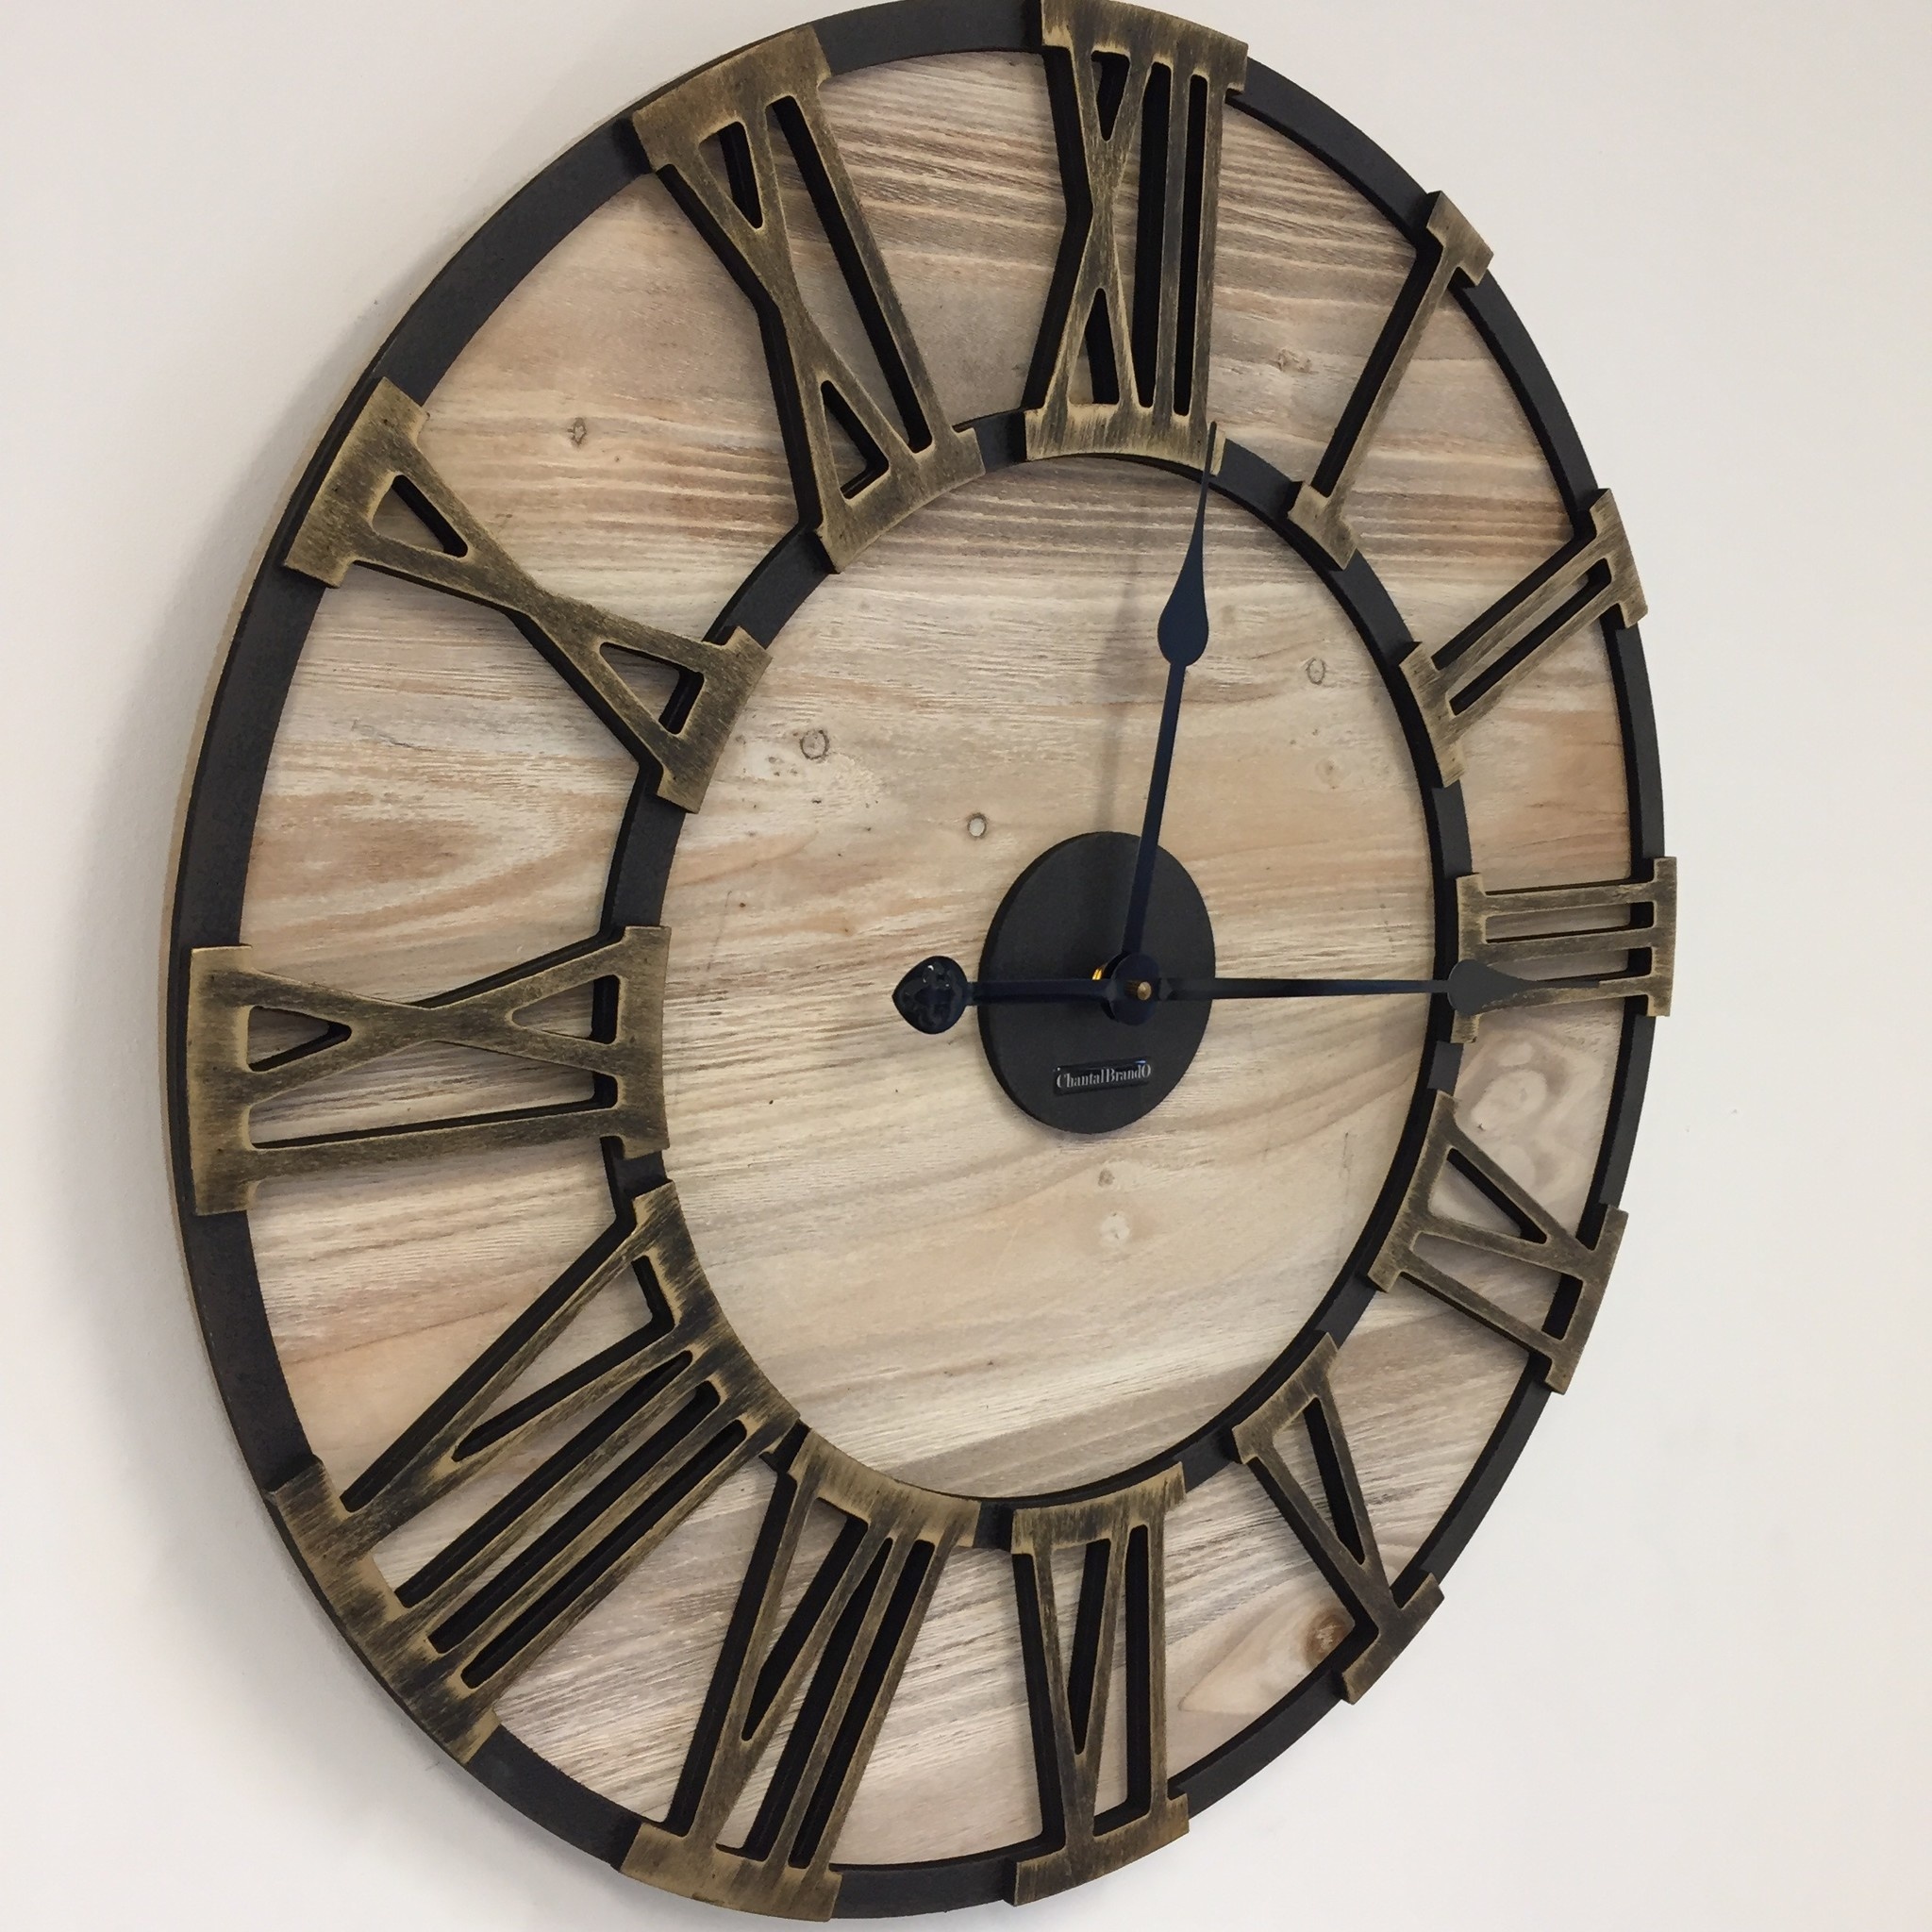 NiceTime Design - Wall clock Metal & Wood Industrial Design